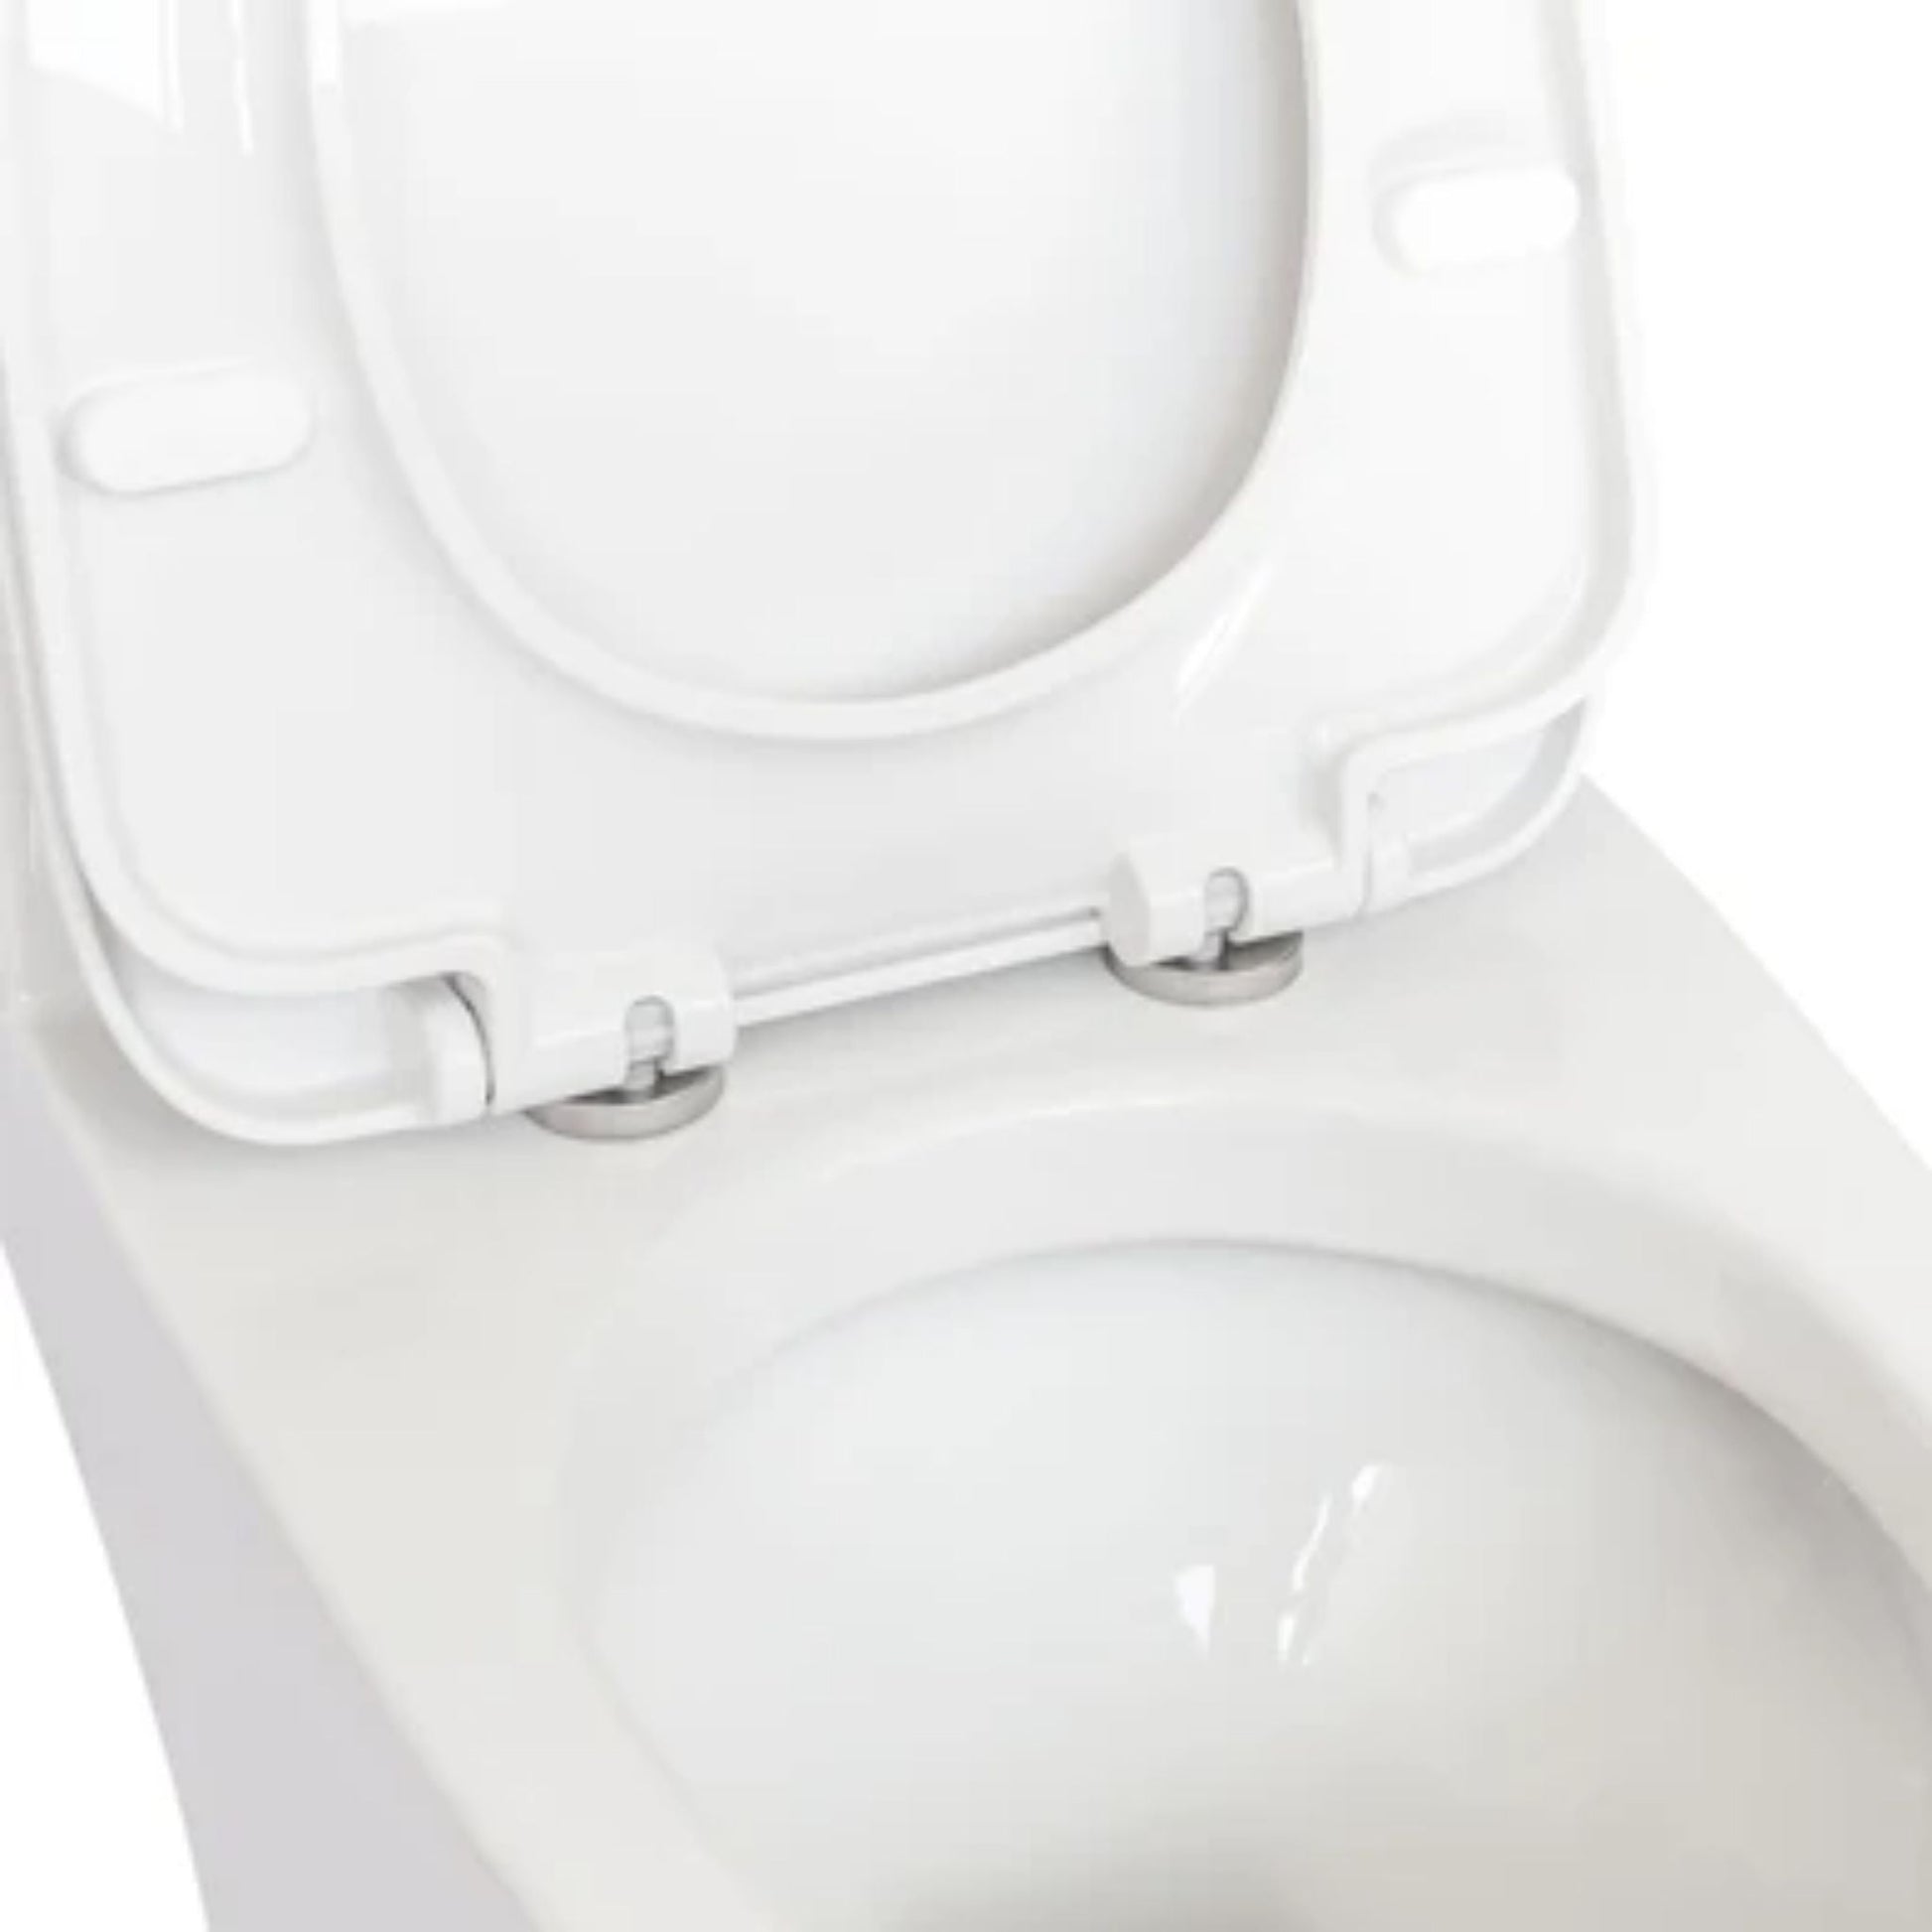 LessCare Dual Flush Elongated One Piece Ceramic Toilet